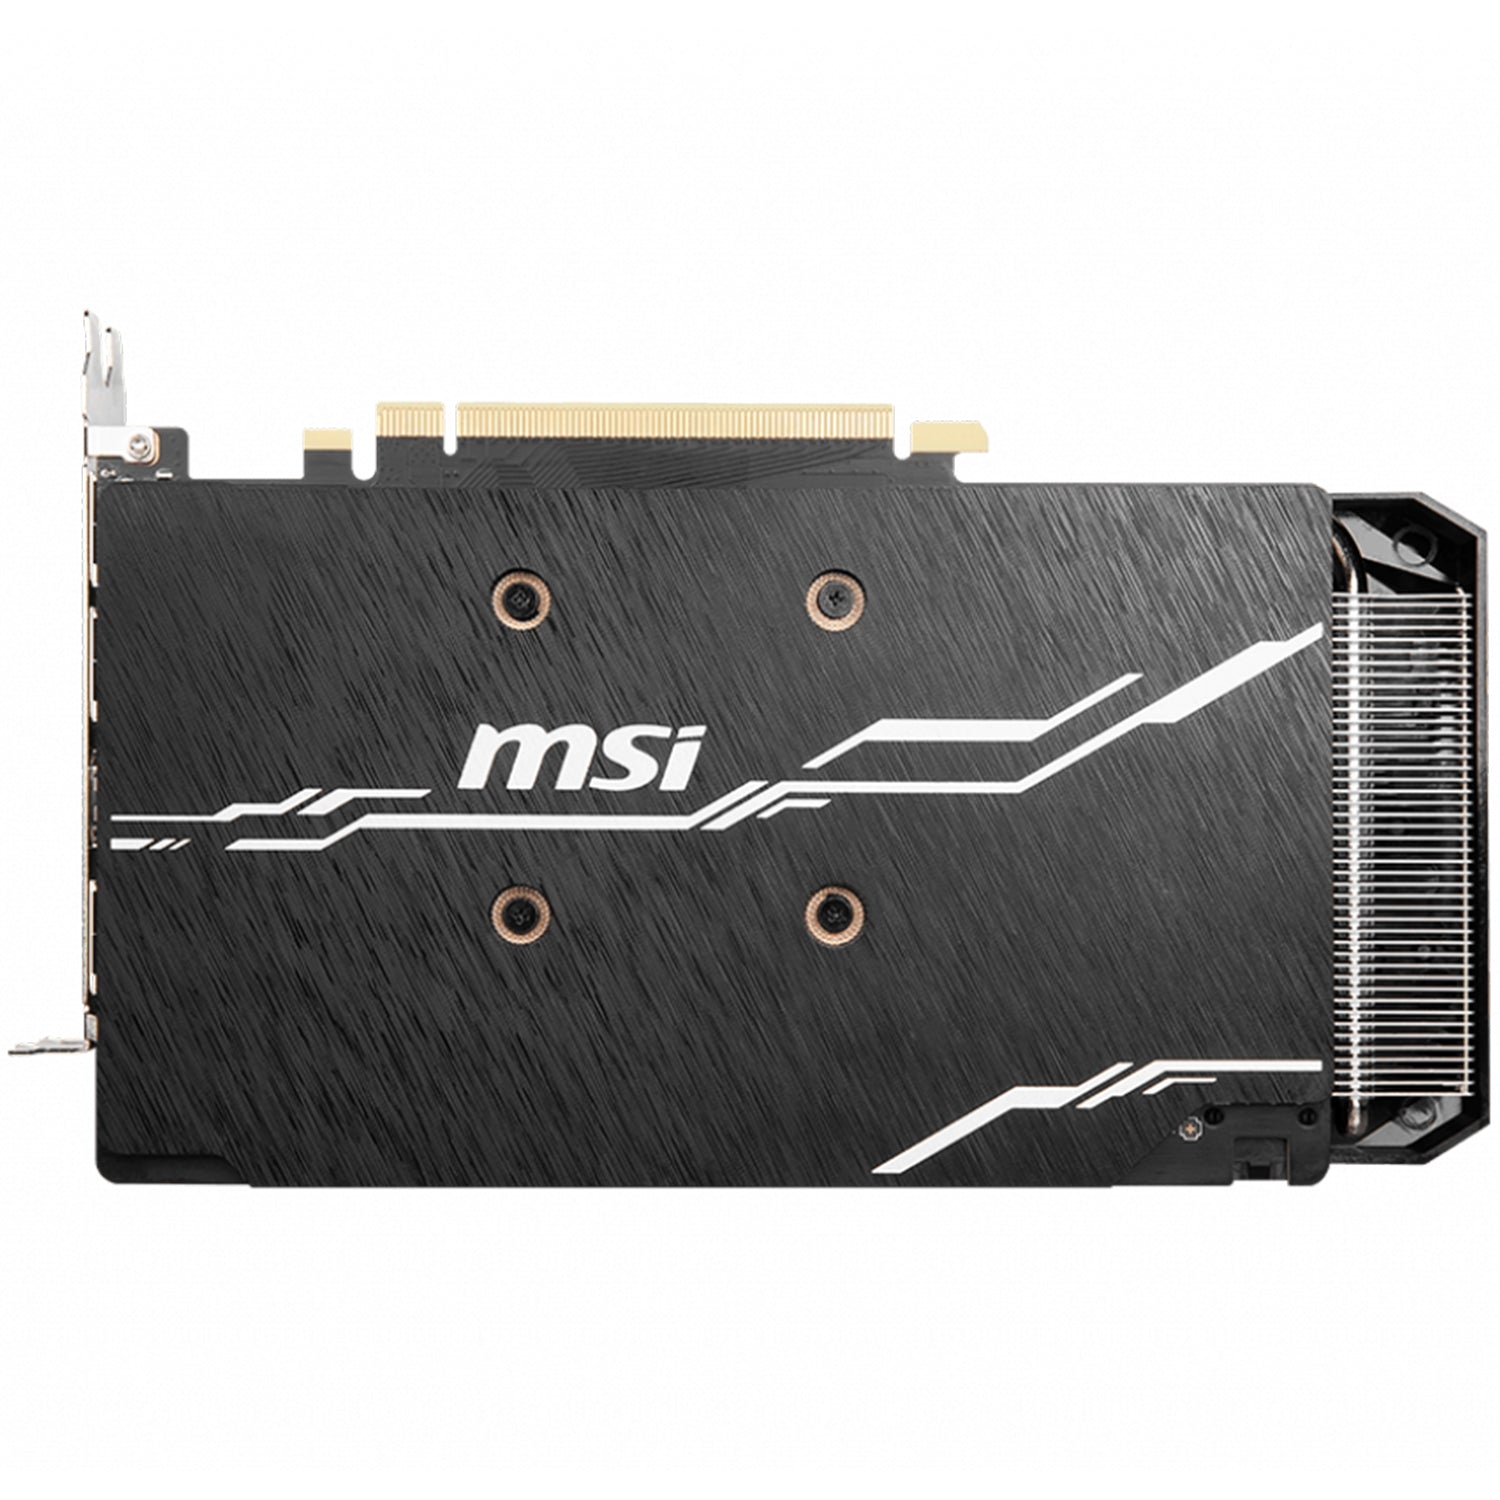 ASUS Phoenix GeForce GTX 1650, 4GB GDDR6 - Video card, PCI Express 3.0 - Graphics card, DVI, Display port, HDMI, HDCP Support (GTX 1650 EVO OC Edition)